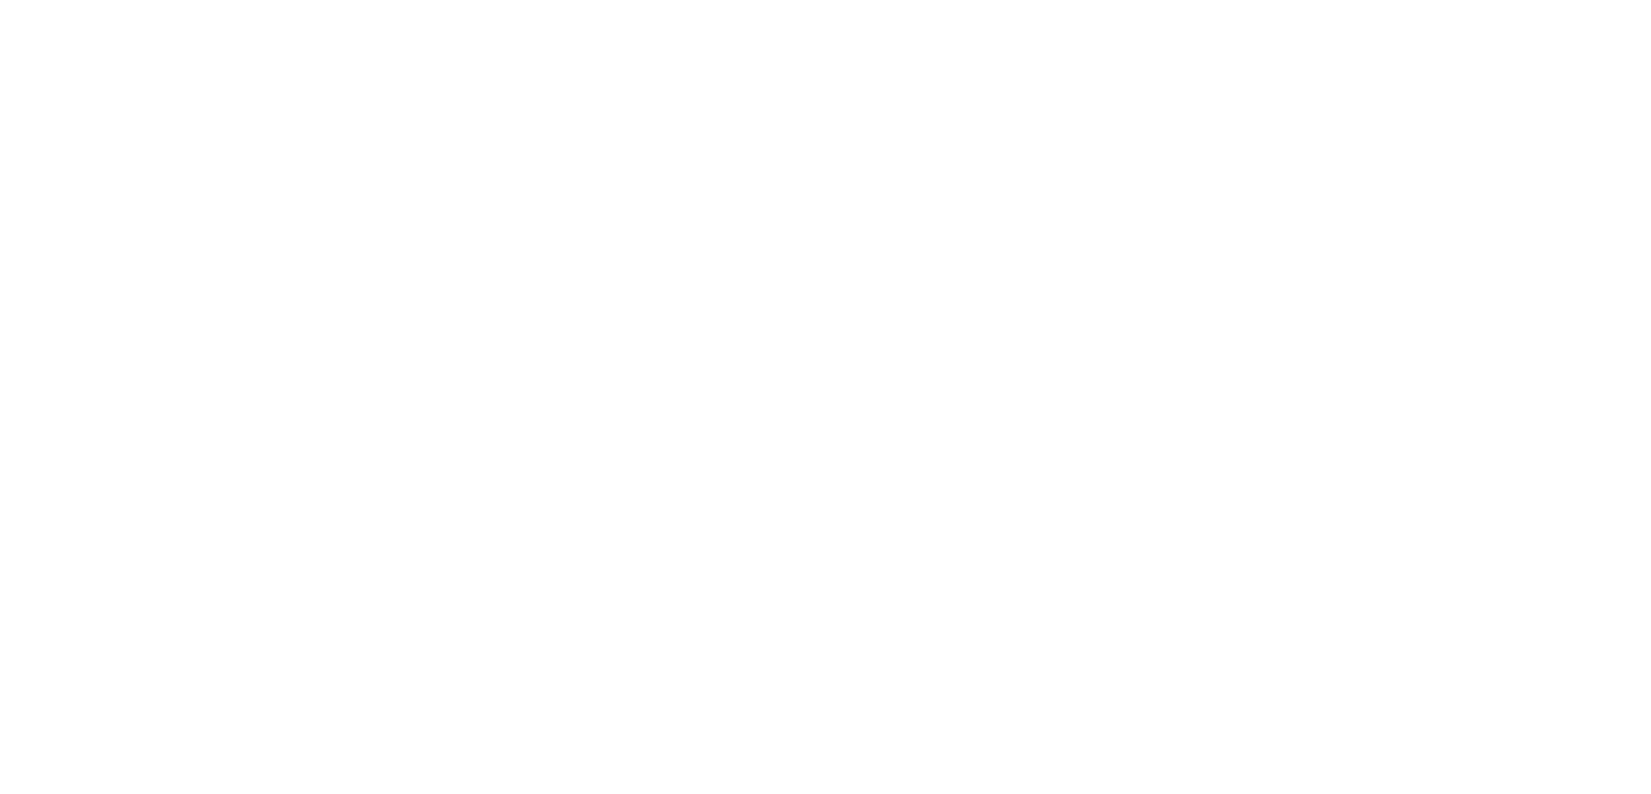 Holland Homes